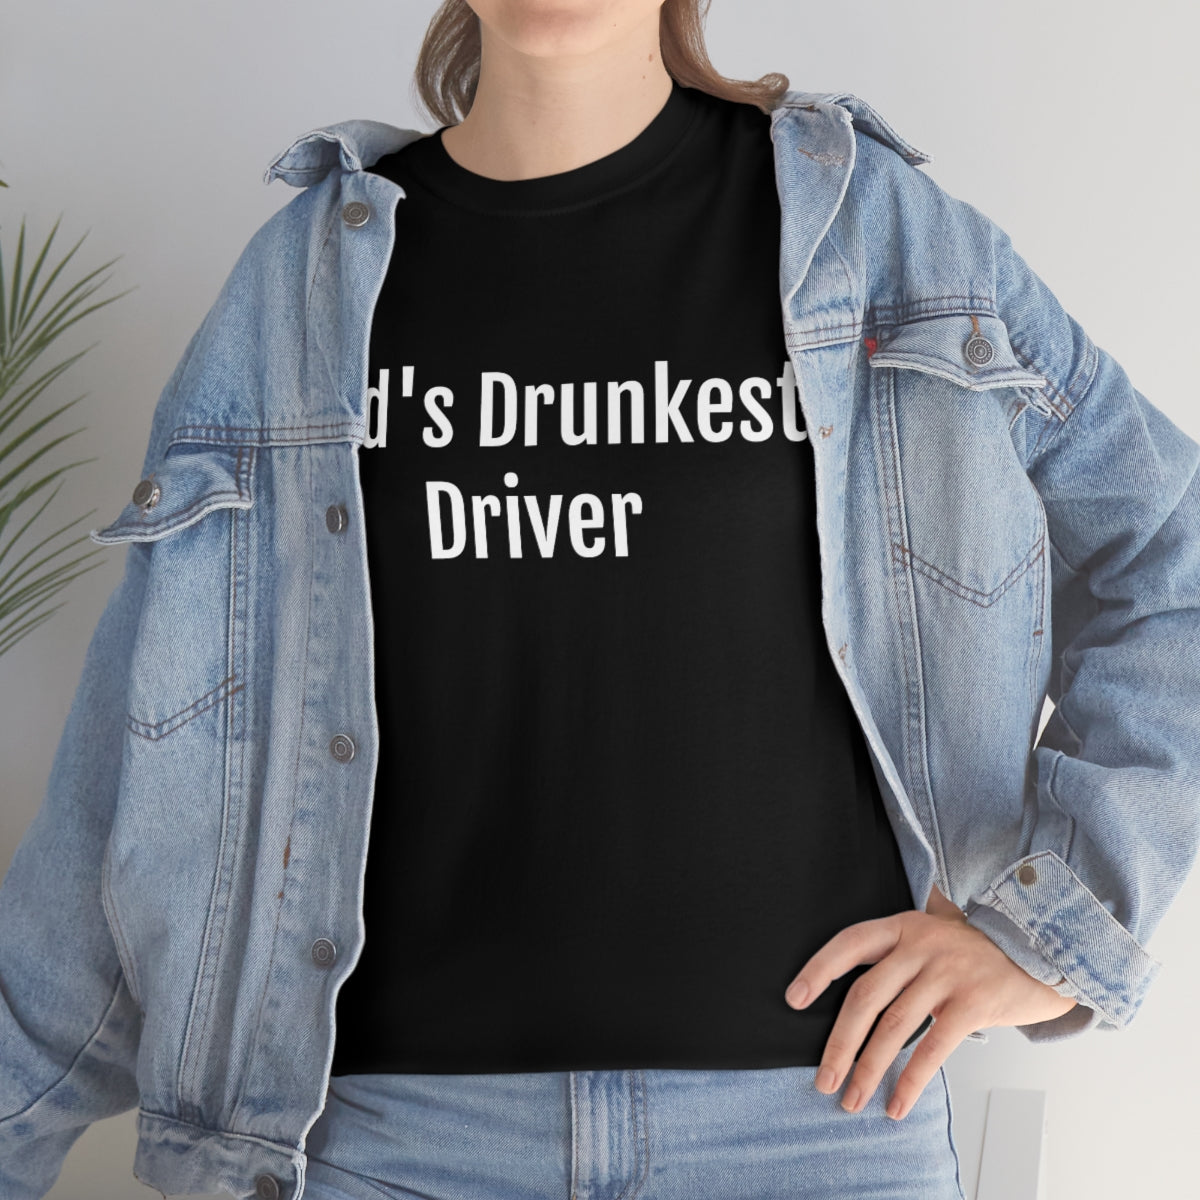 GODS DRUNKEST DRIVER T-SHIRT